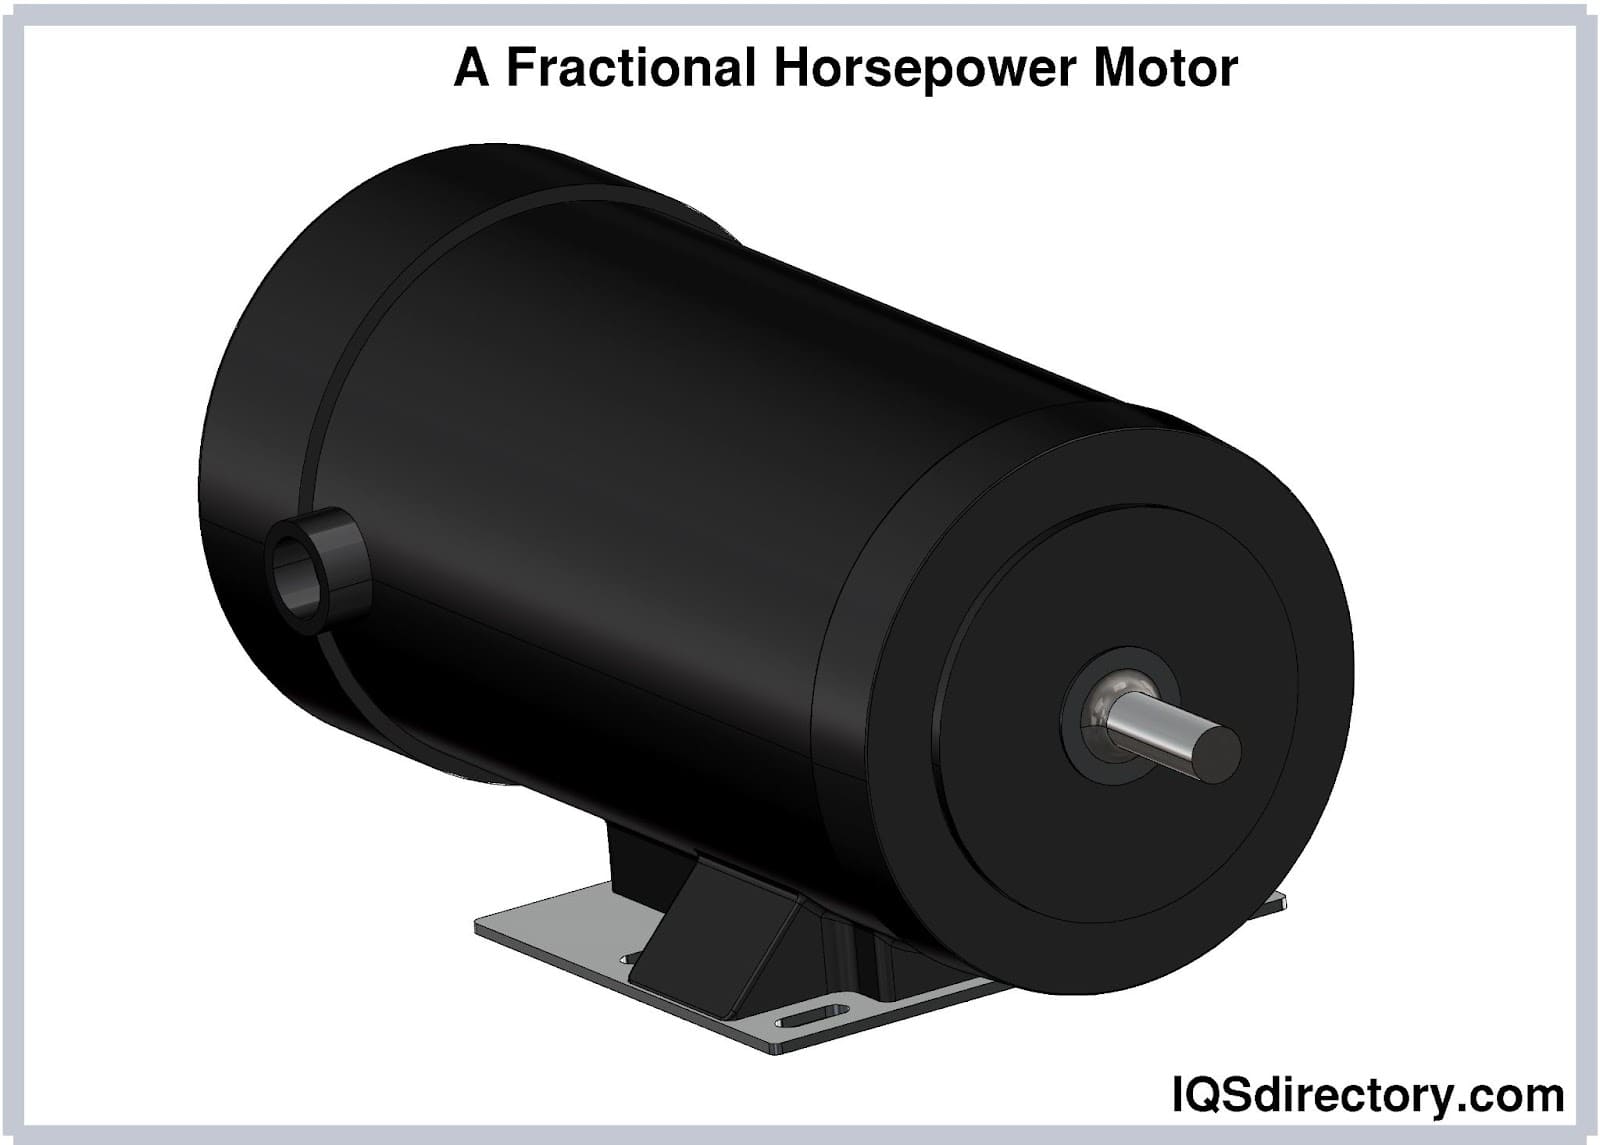 https://www.iqsdirectory.com/articles/fractional-horsepower-motor/a-fractional-horsepower-motor.jpg